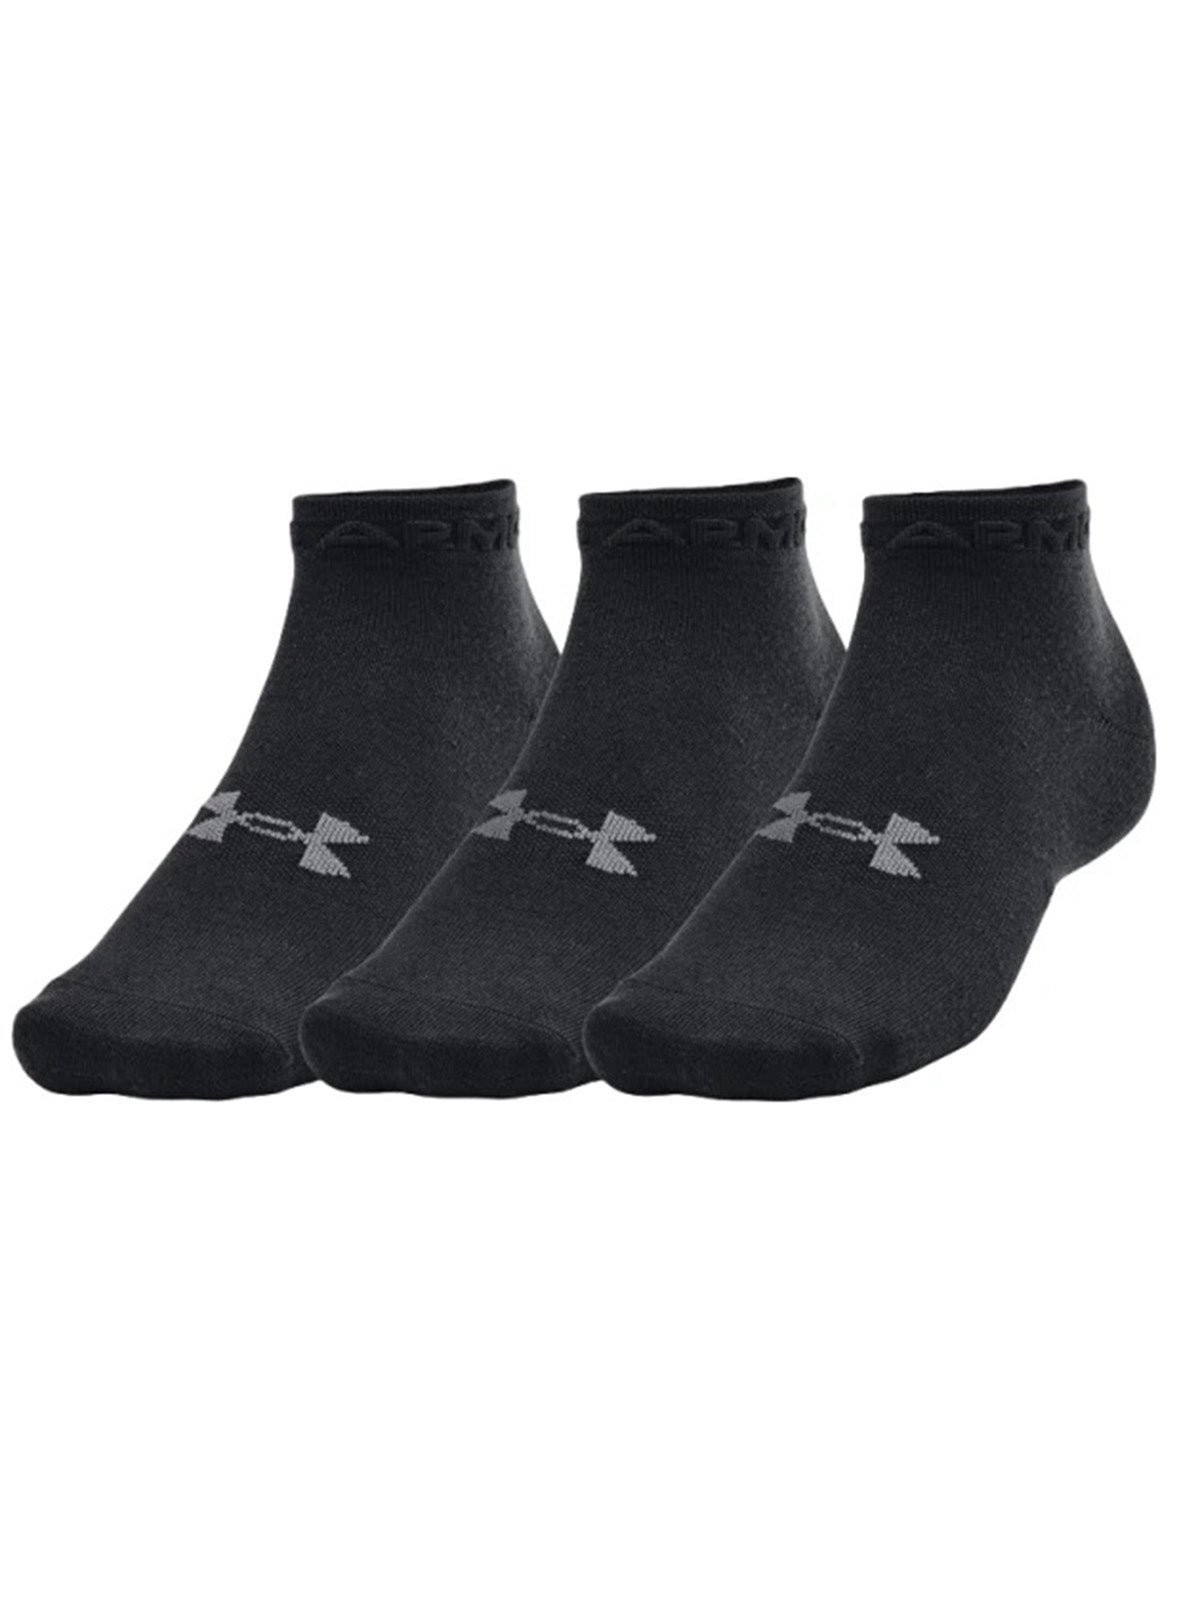 Calze Unisex Under Armour - Ua Essential Low Cut 3Pk Socks - Nero